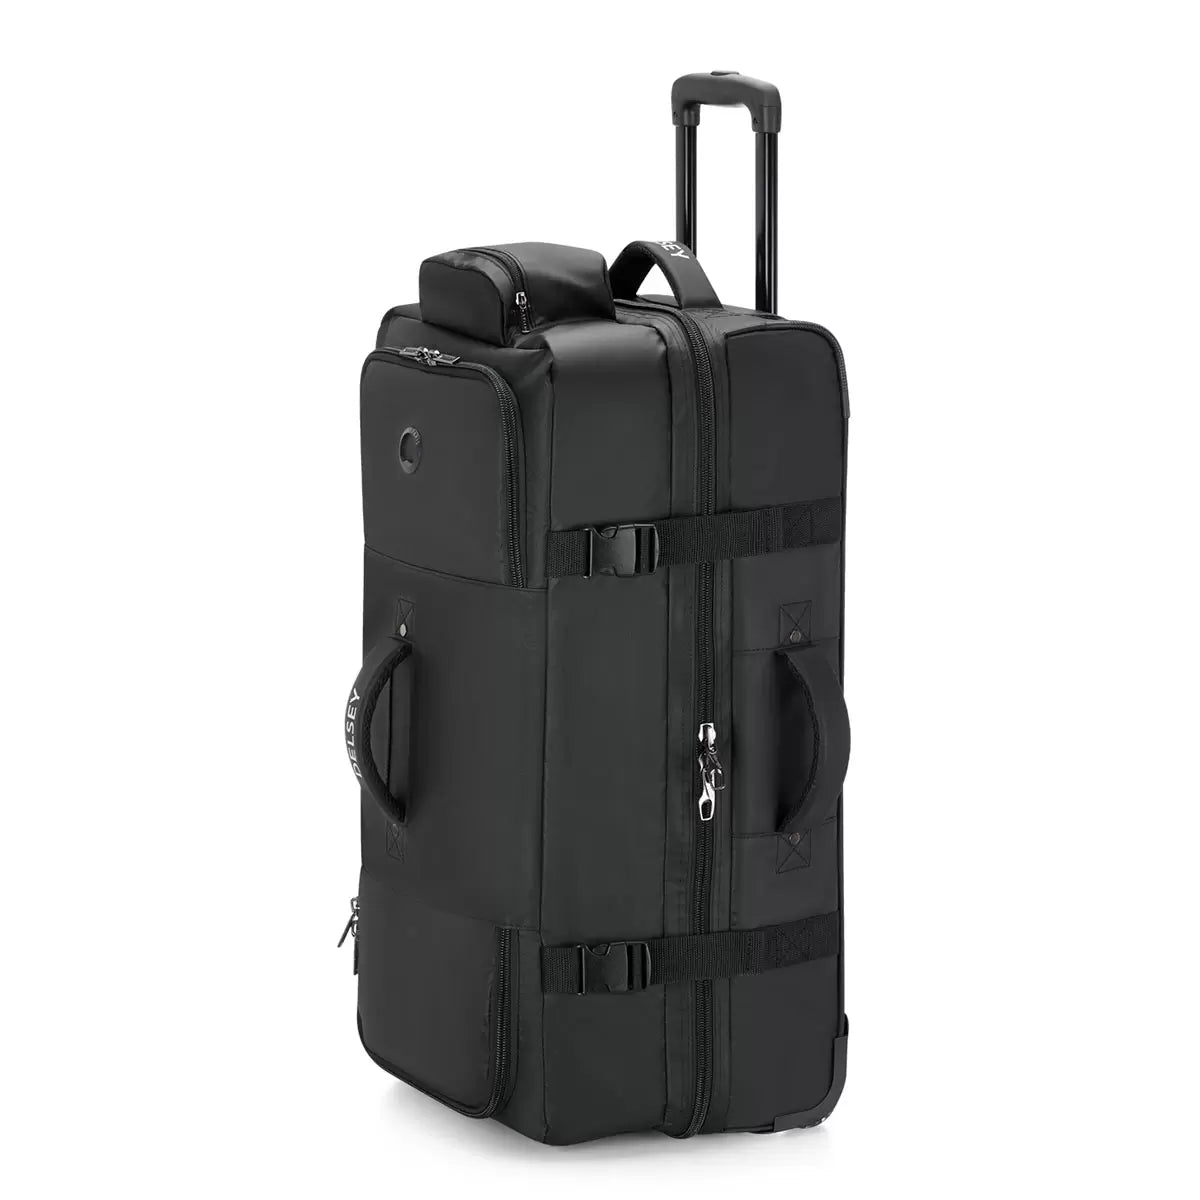 Brand New Delsey 28.7" (73cm) Wheeled Waterproof Duffel Bag Travel Luggage